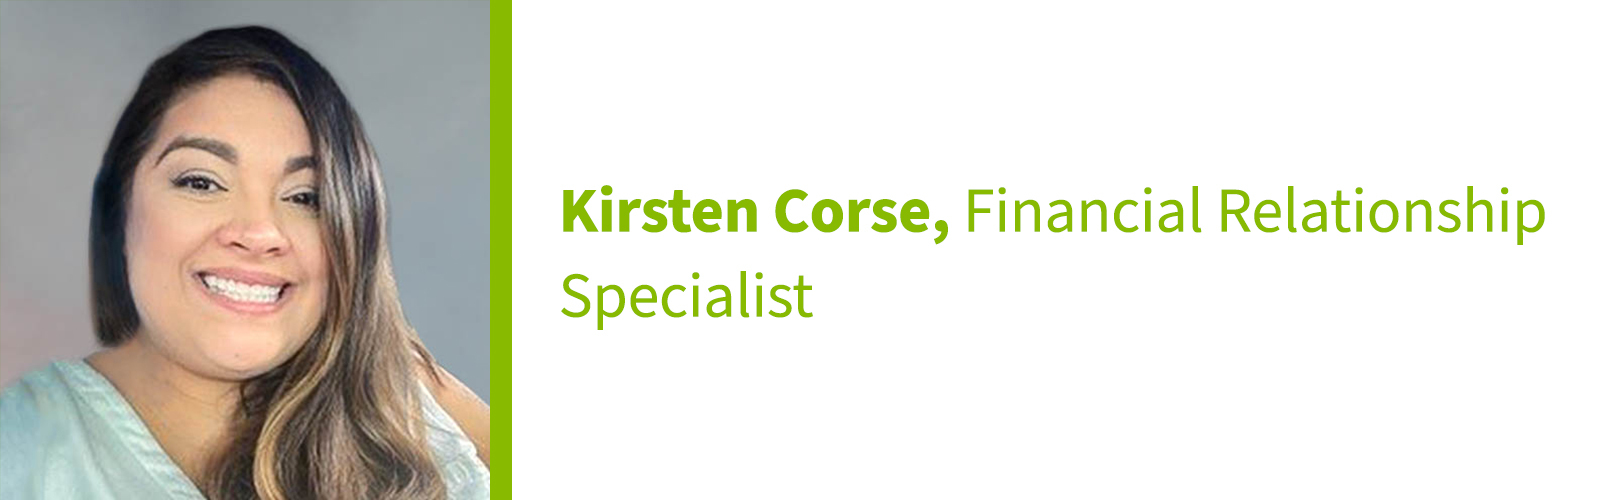 Kirsten Corse, Financial Relationship Specialist